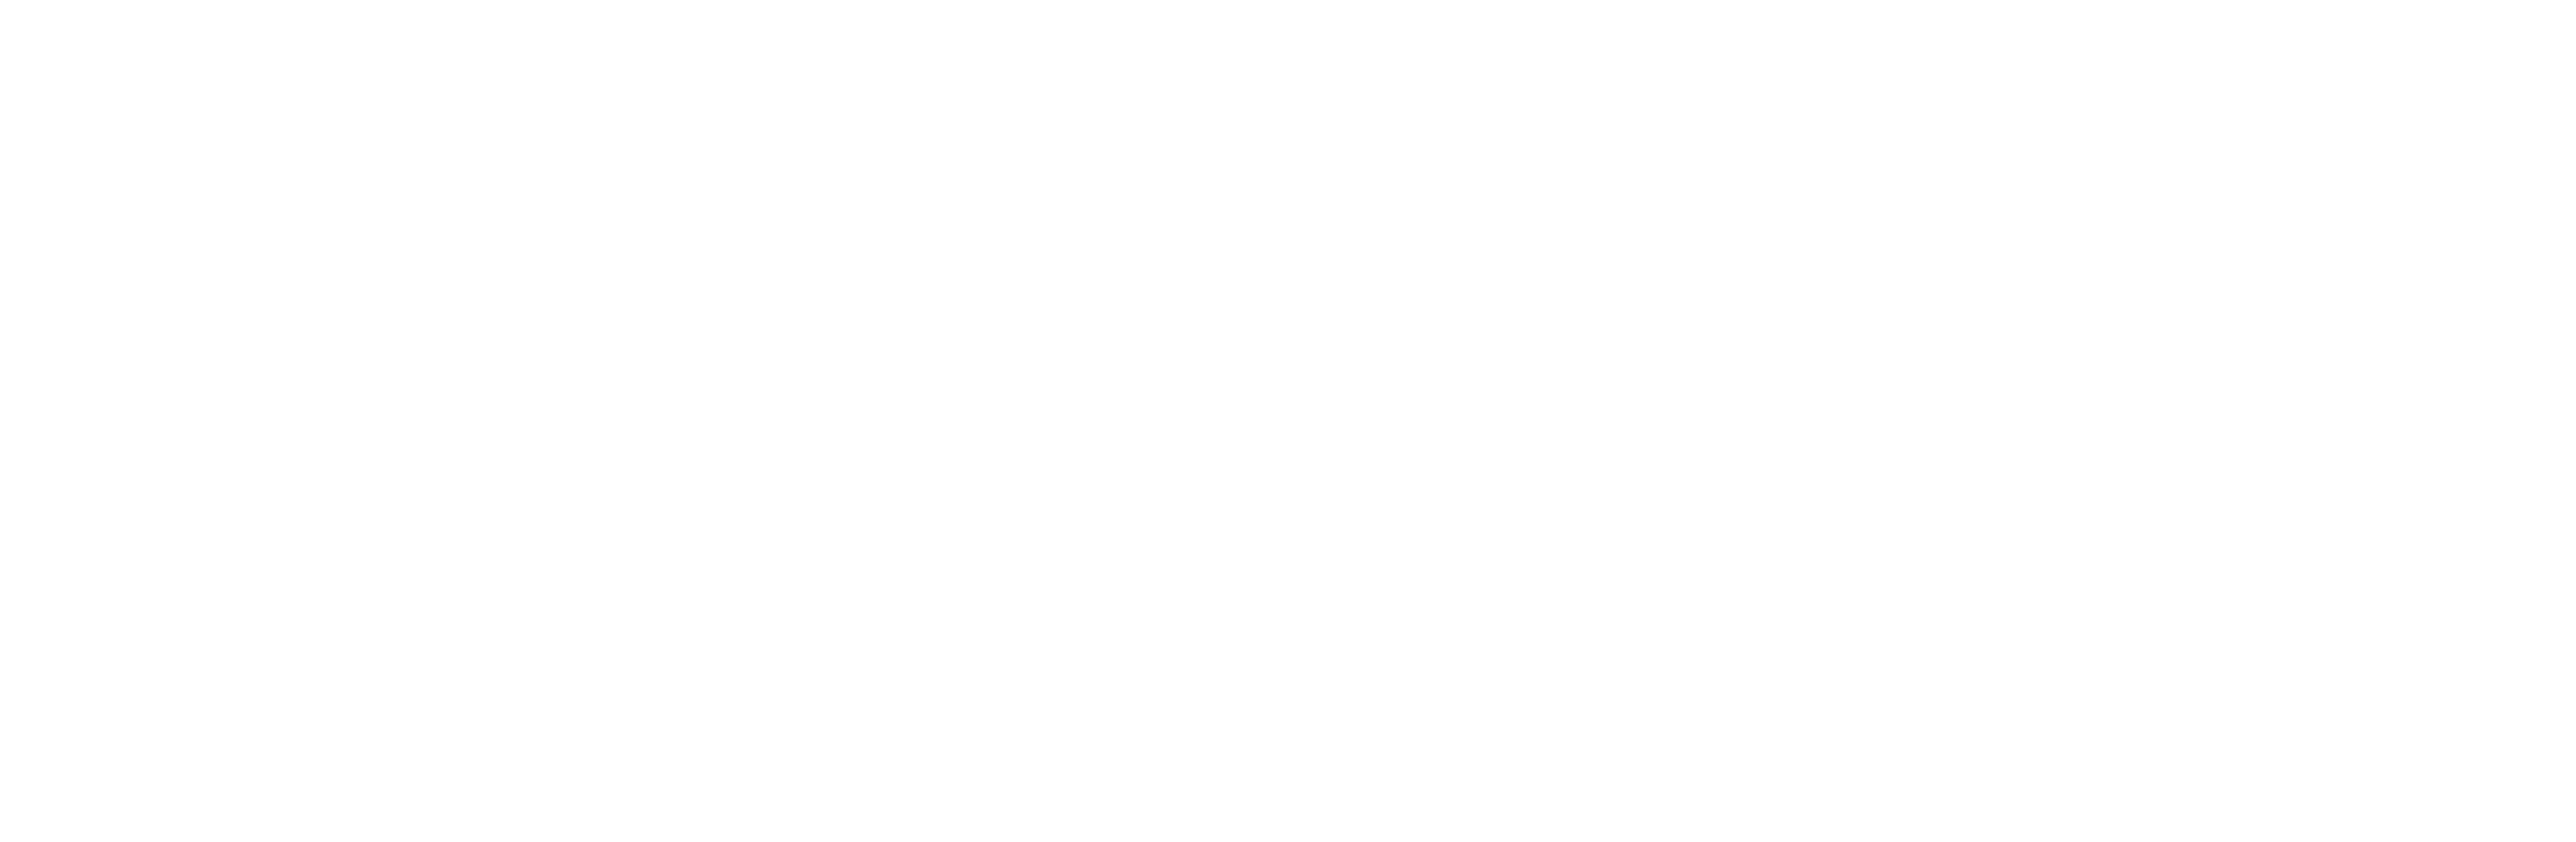 Wheeloworld.com